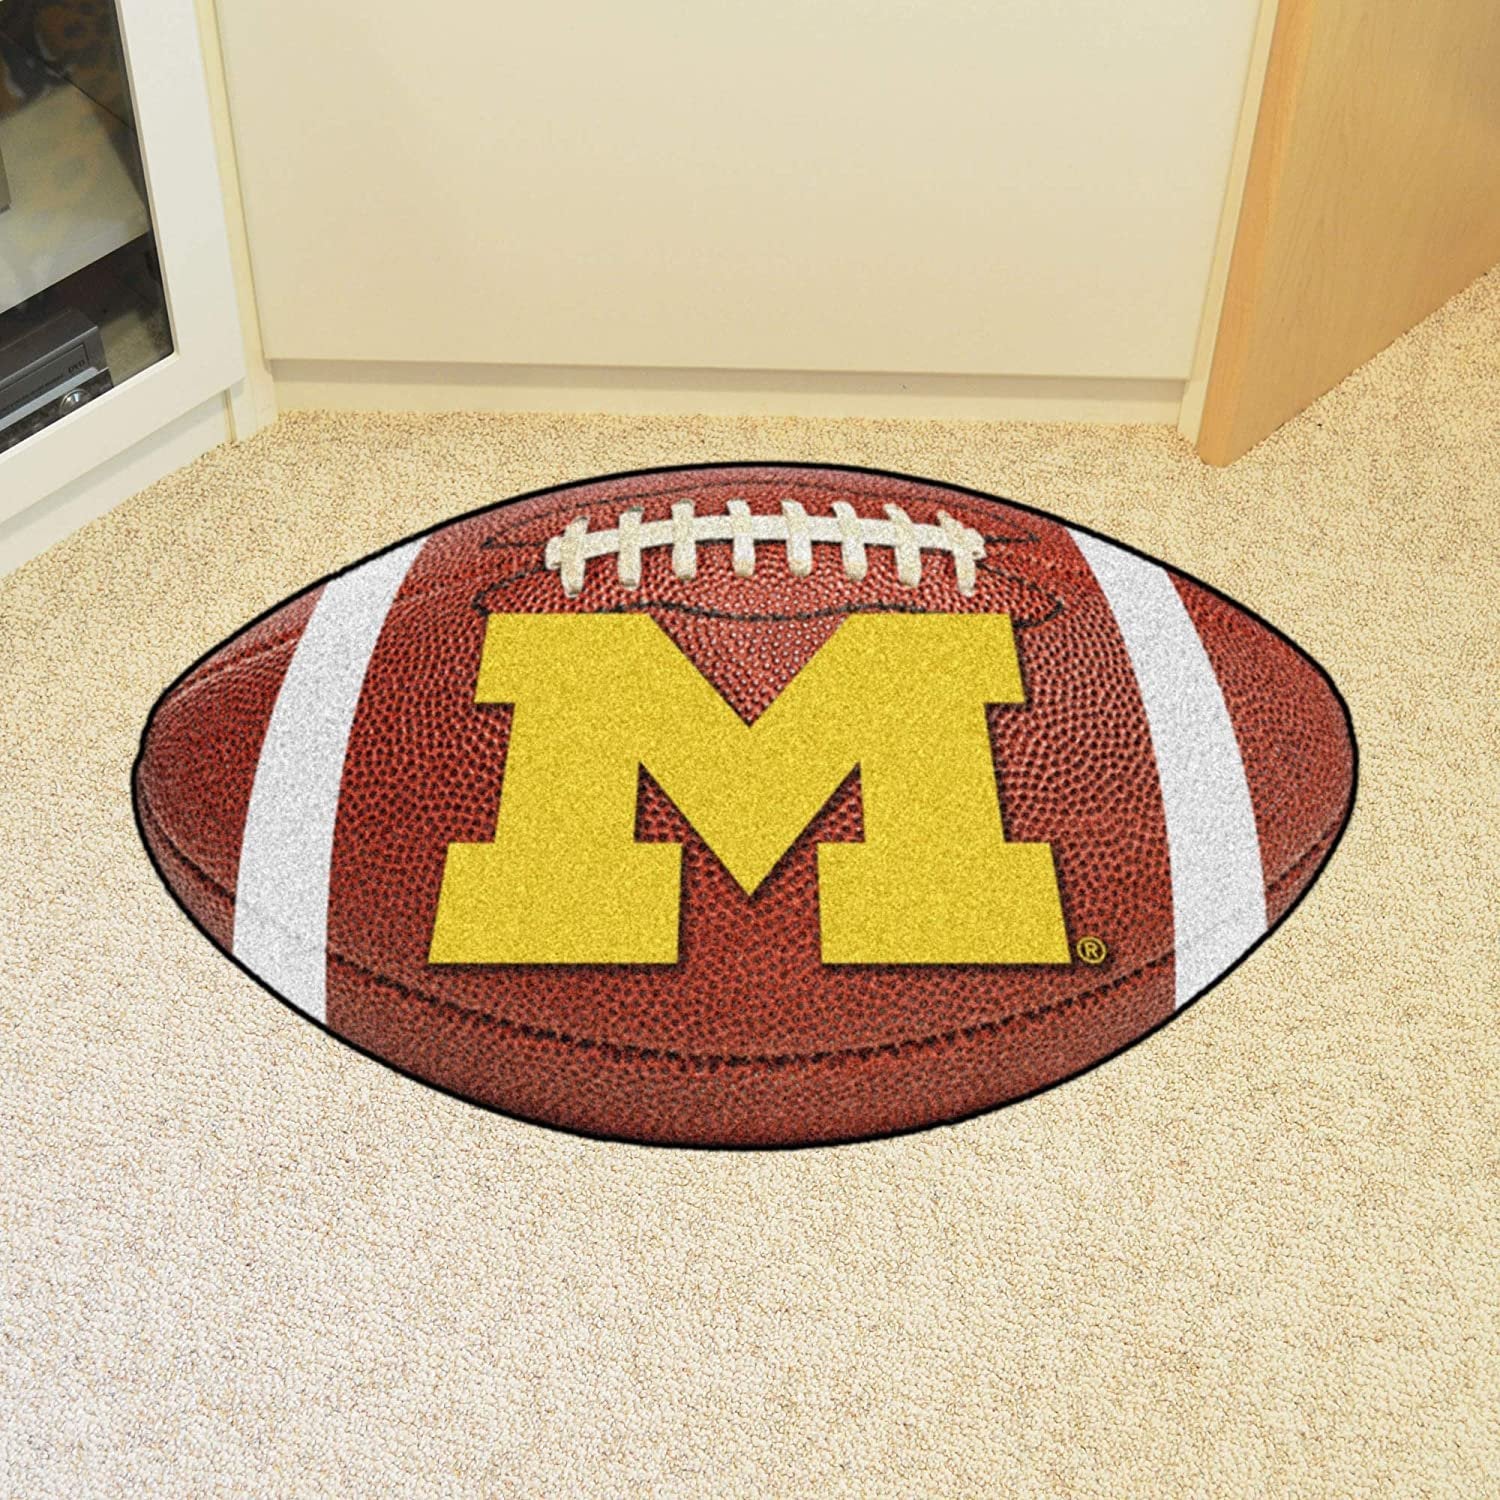 University of Michigan Wolverines Floor Mat Area Rug, 20x32 Inch, Non-Skid Backing, Football Design